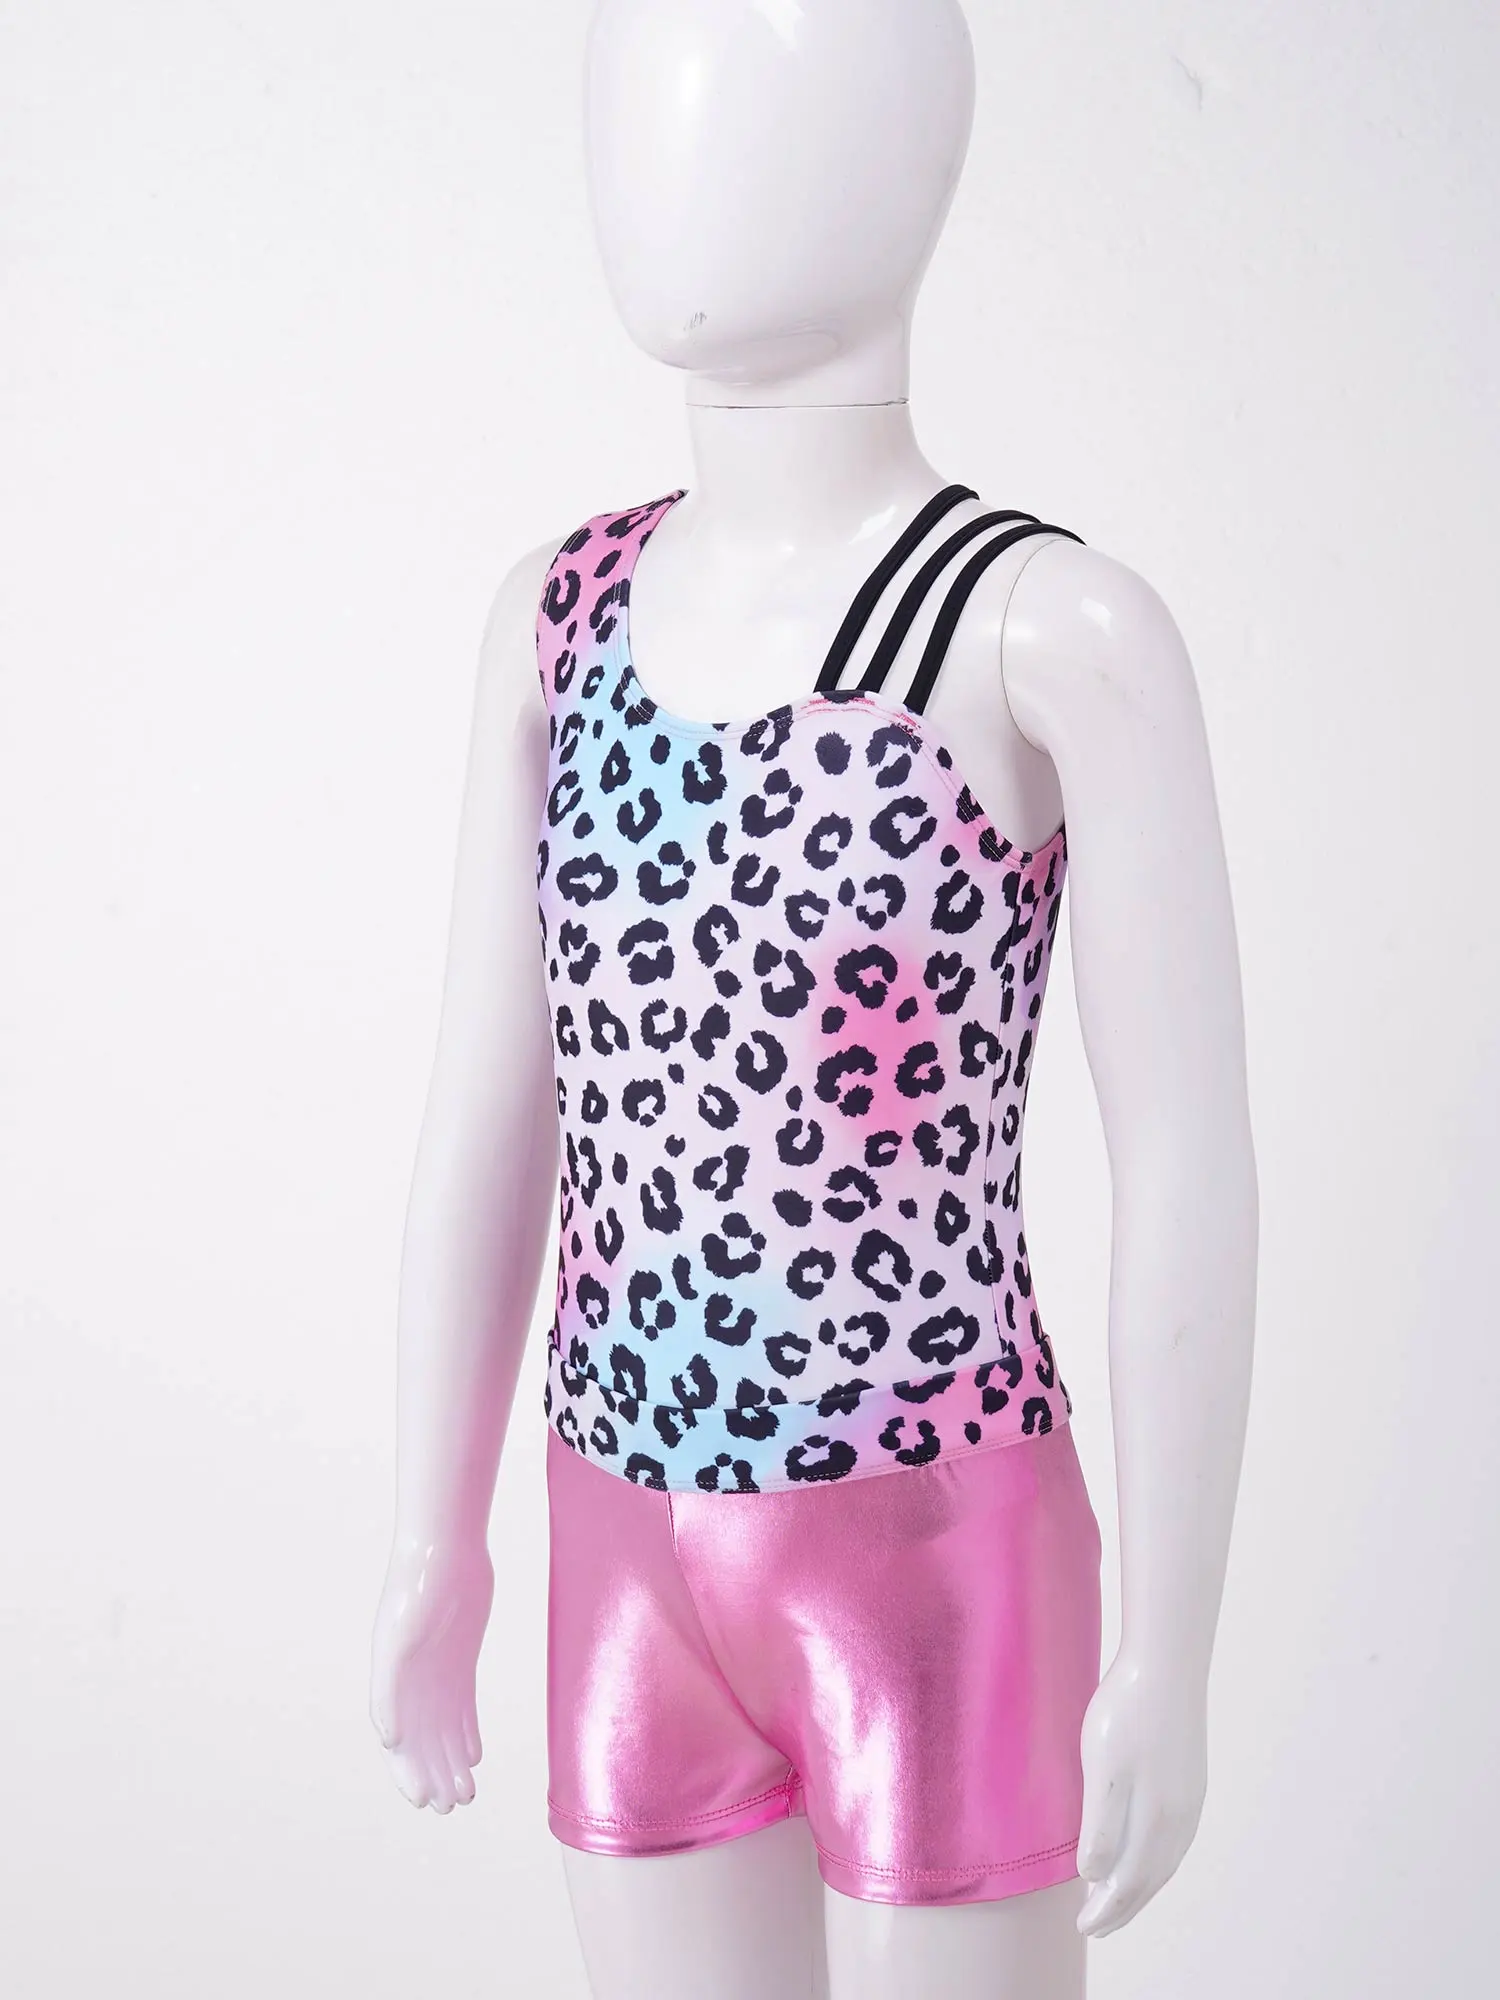 Kids Girl Ballet Dance Gymnastic Leotard Sleeveless Bodysuit with Shorts Skating Stage Performance Dancewear Swimwear Sportswear